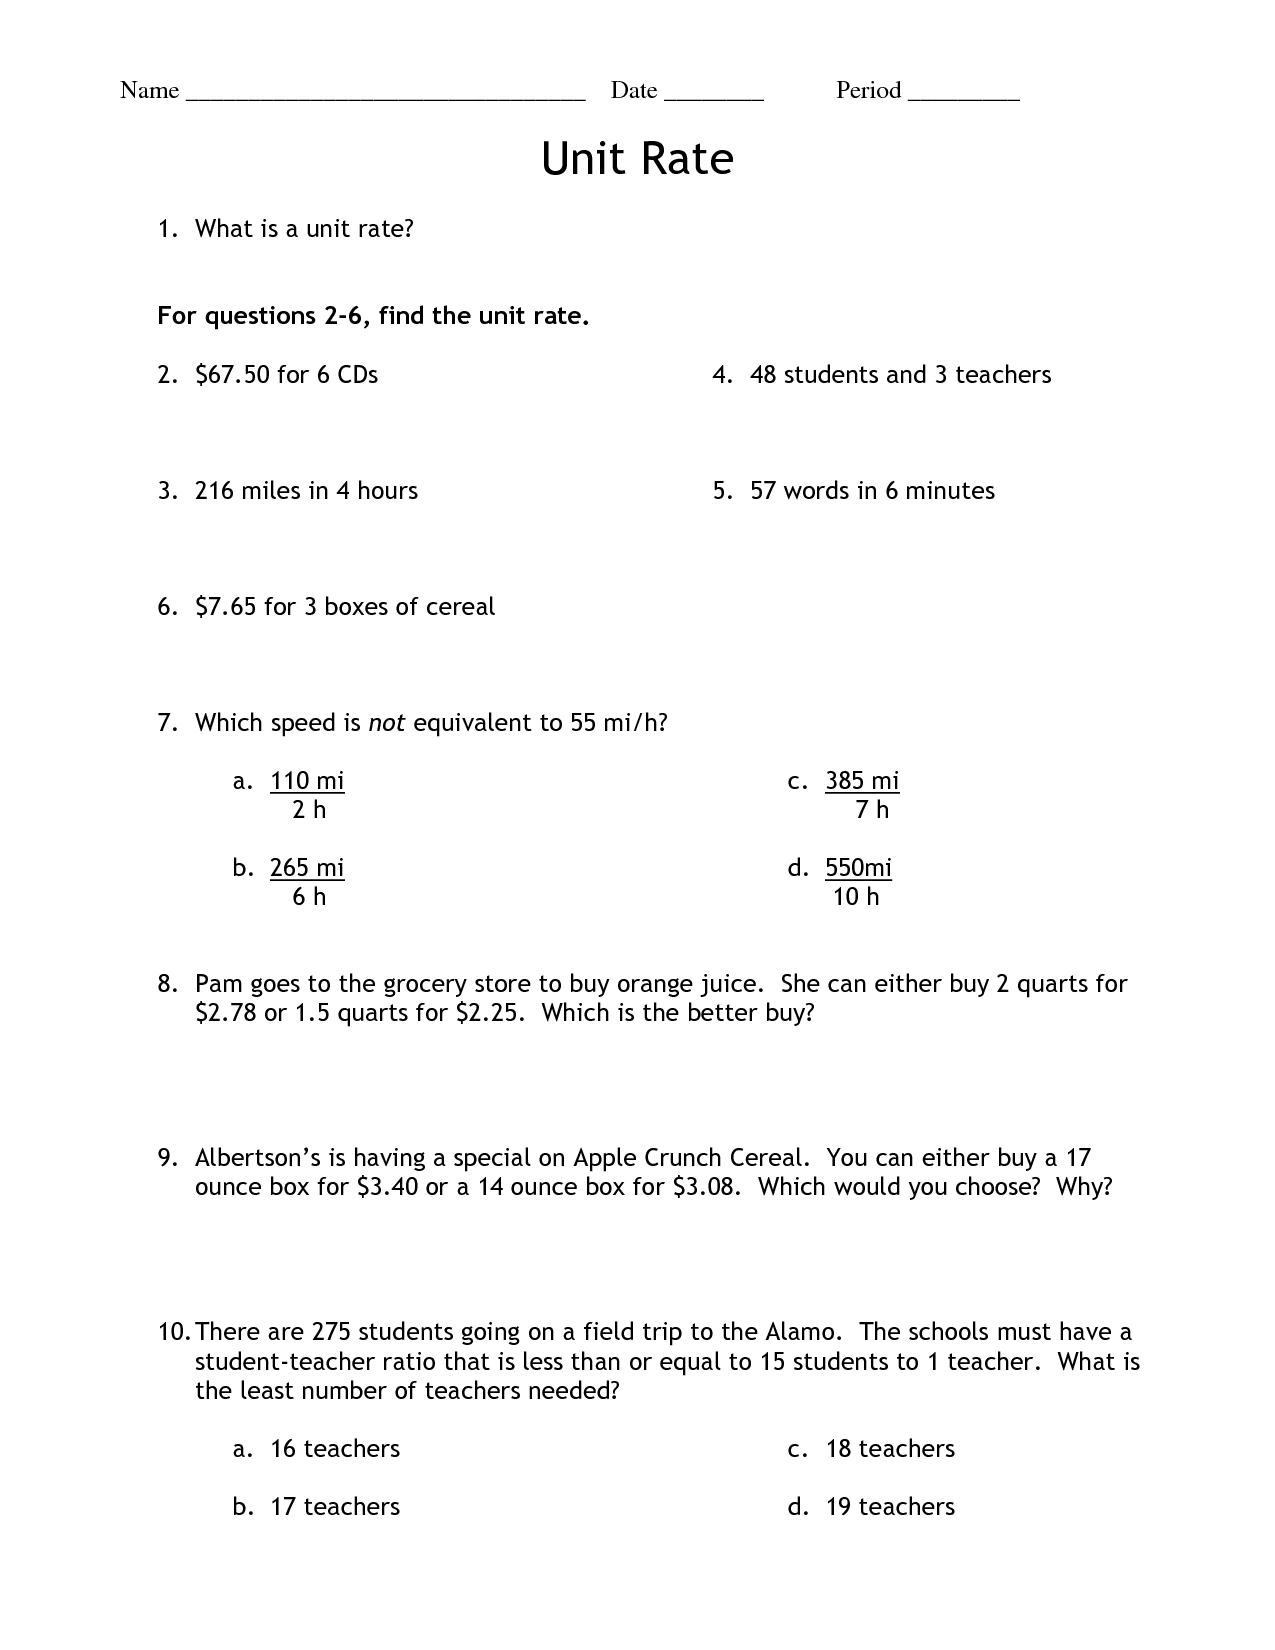 solving unit rate problems worksheet